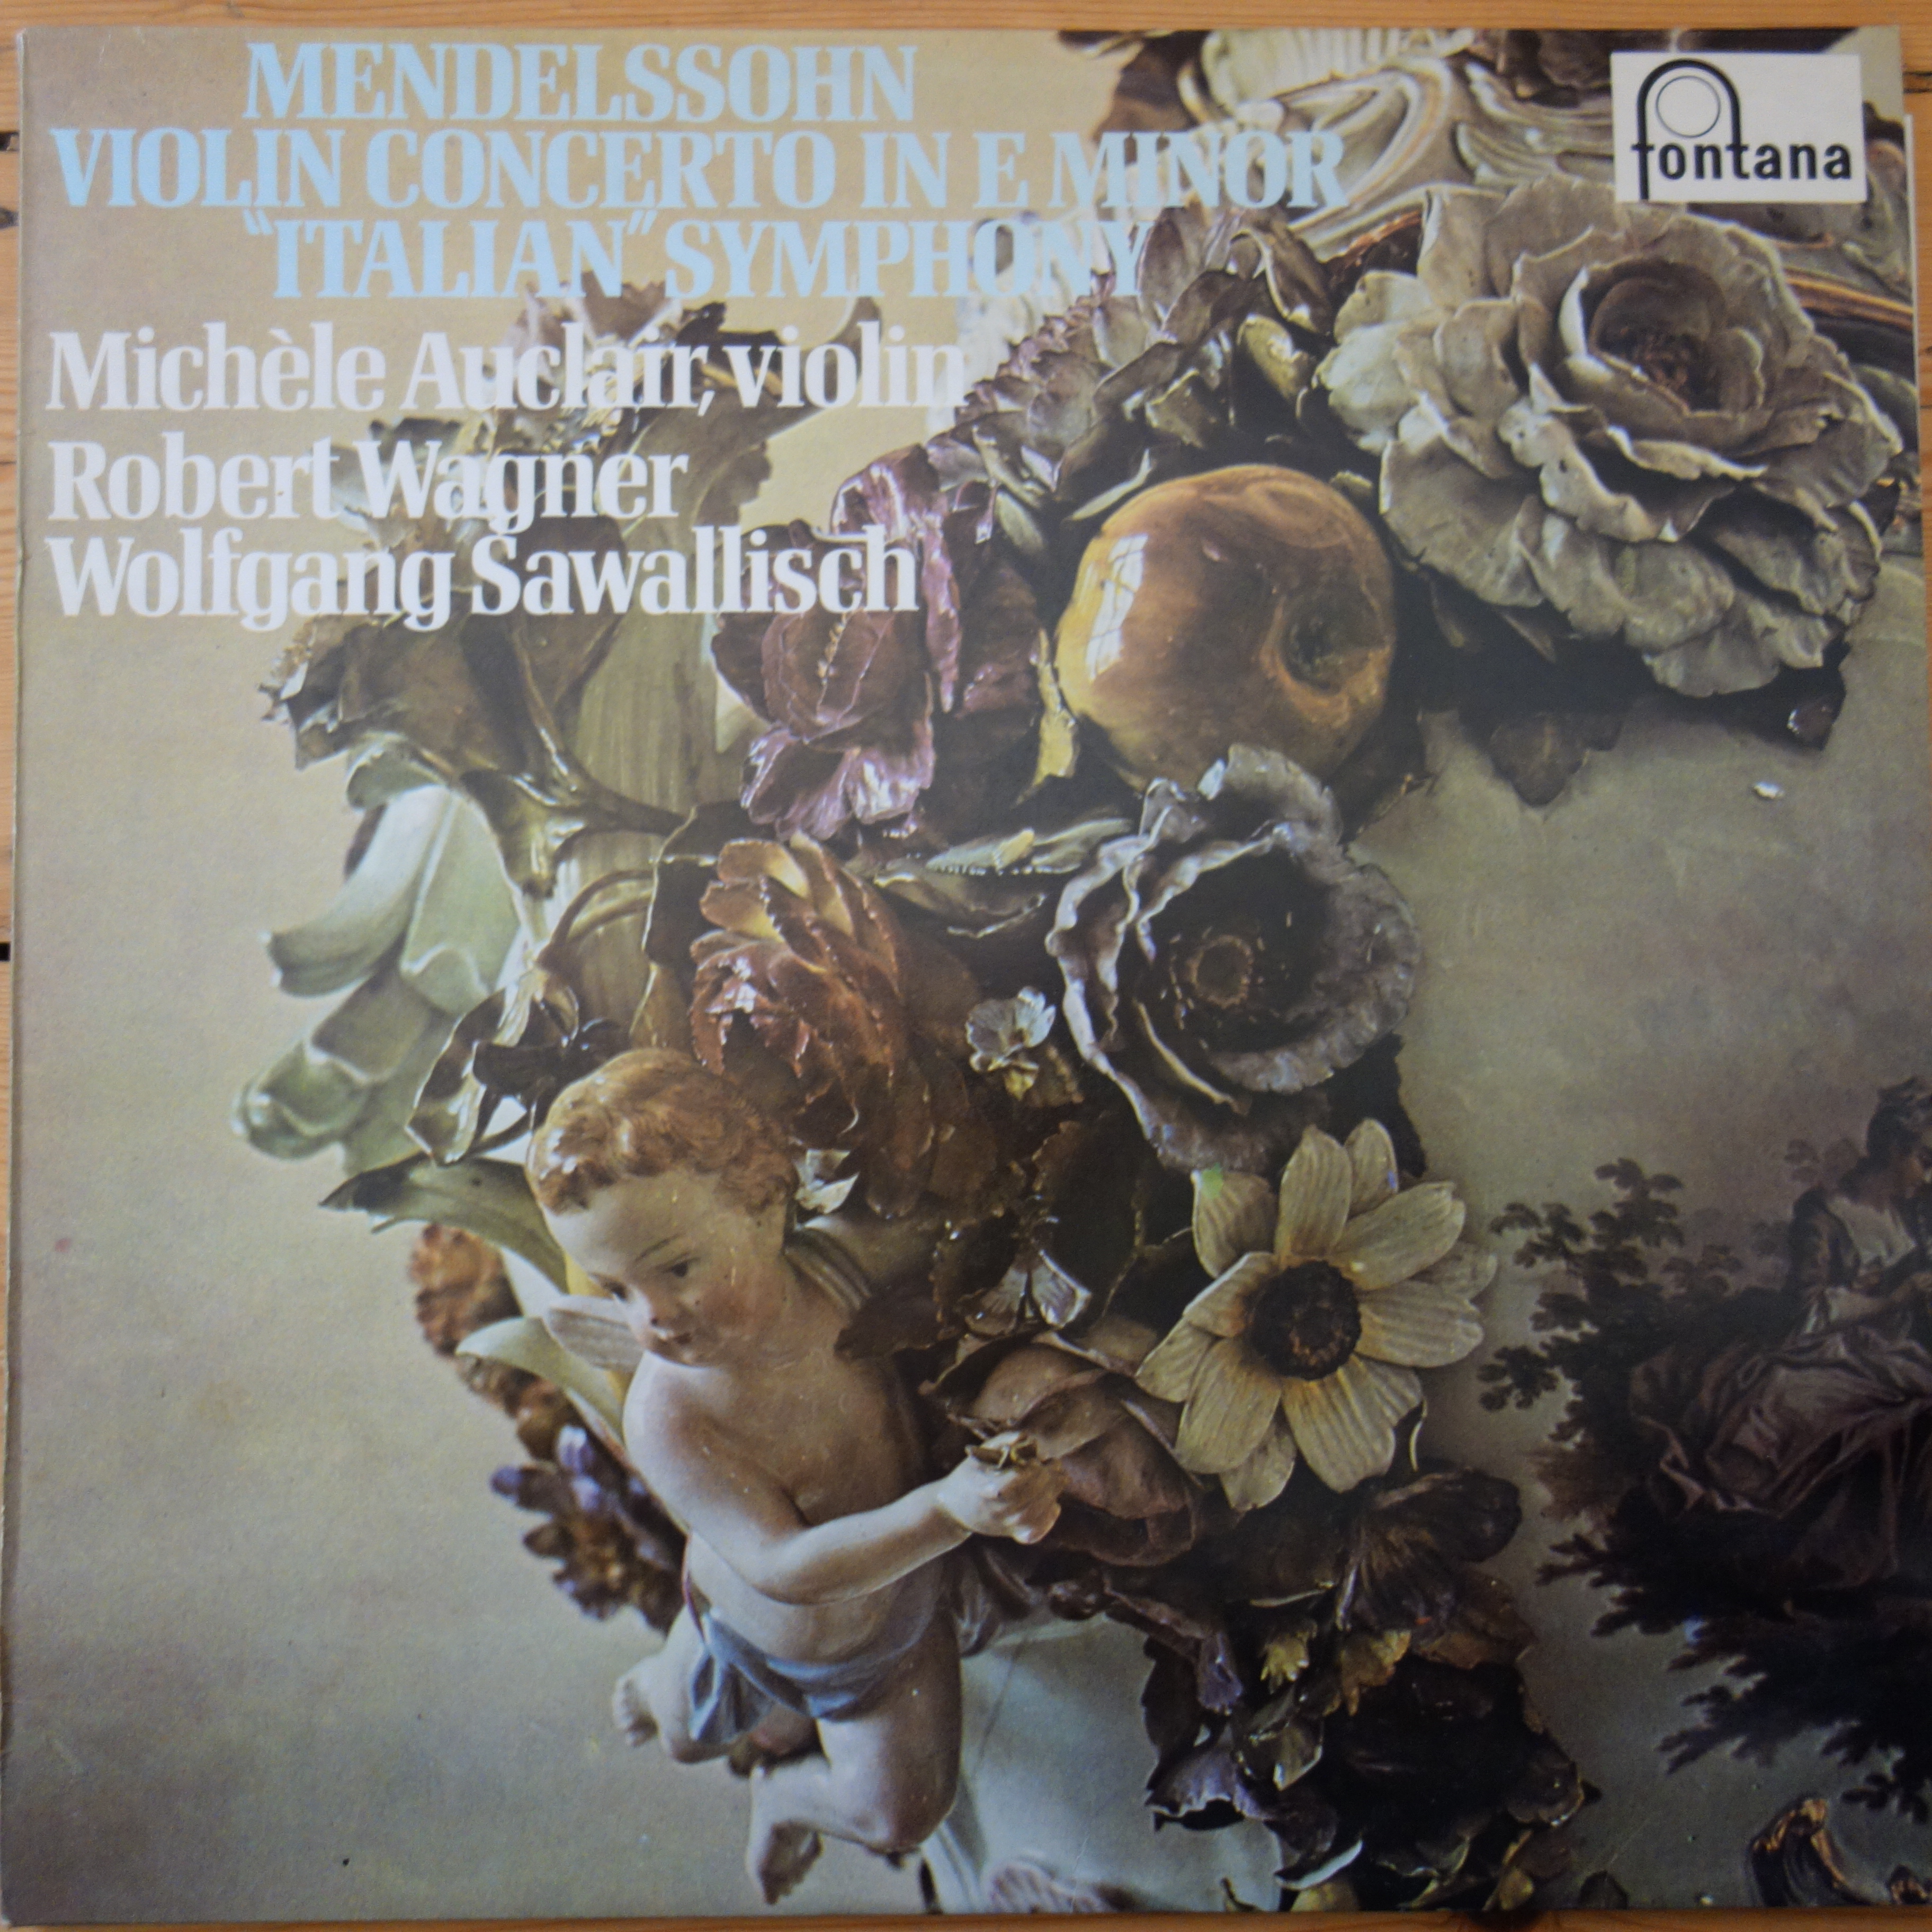 6530 006 Mendelssohn Violin Concerto in E minor etc. / Michele Auclair